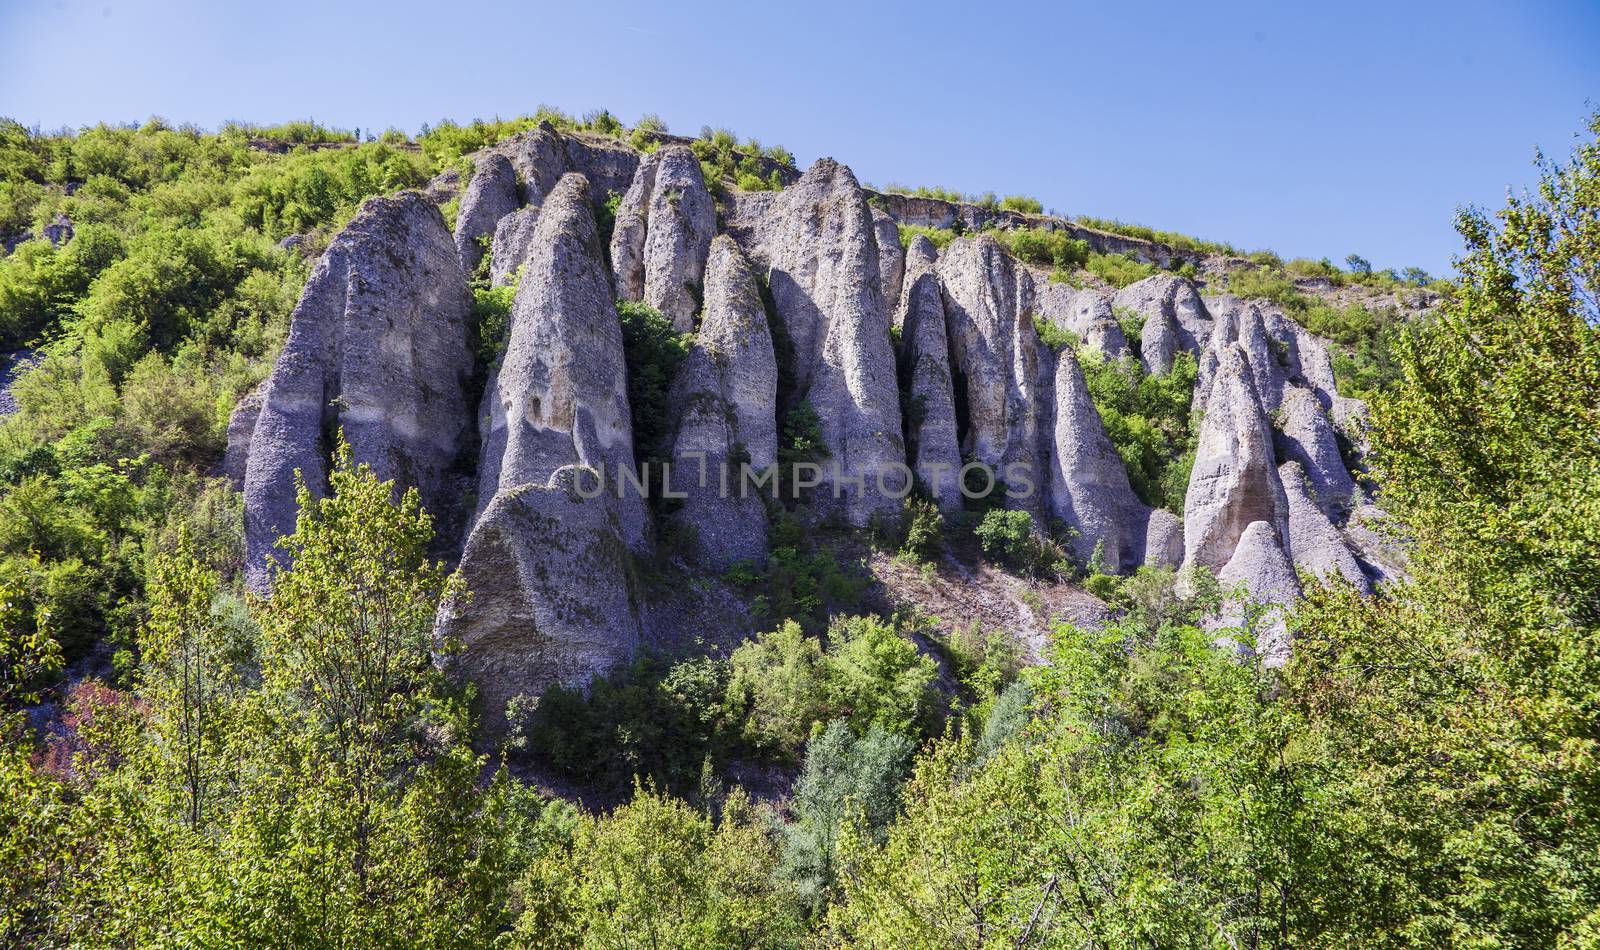 A view of Reselski kukli rcks phenomenom, near vilage Reselets, some 100km from Sofia, Bulgaria.